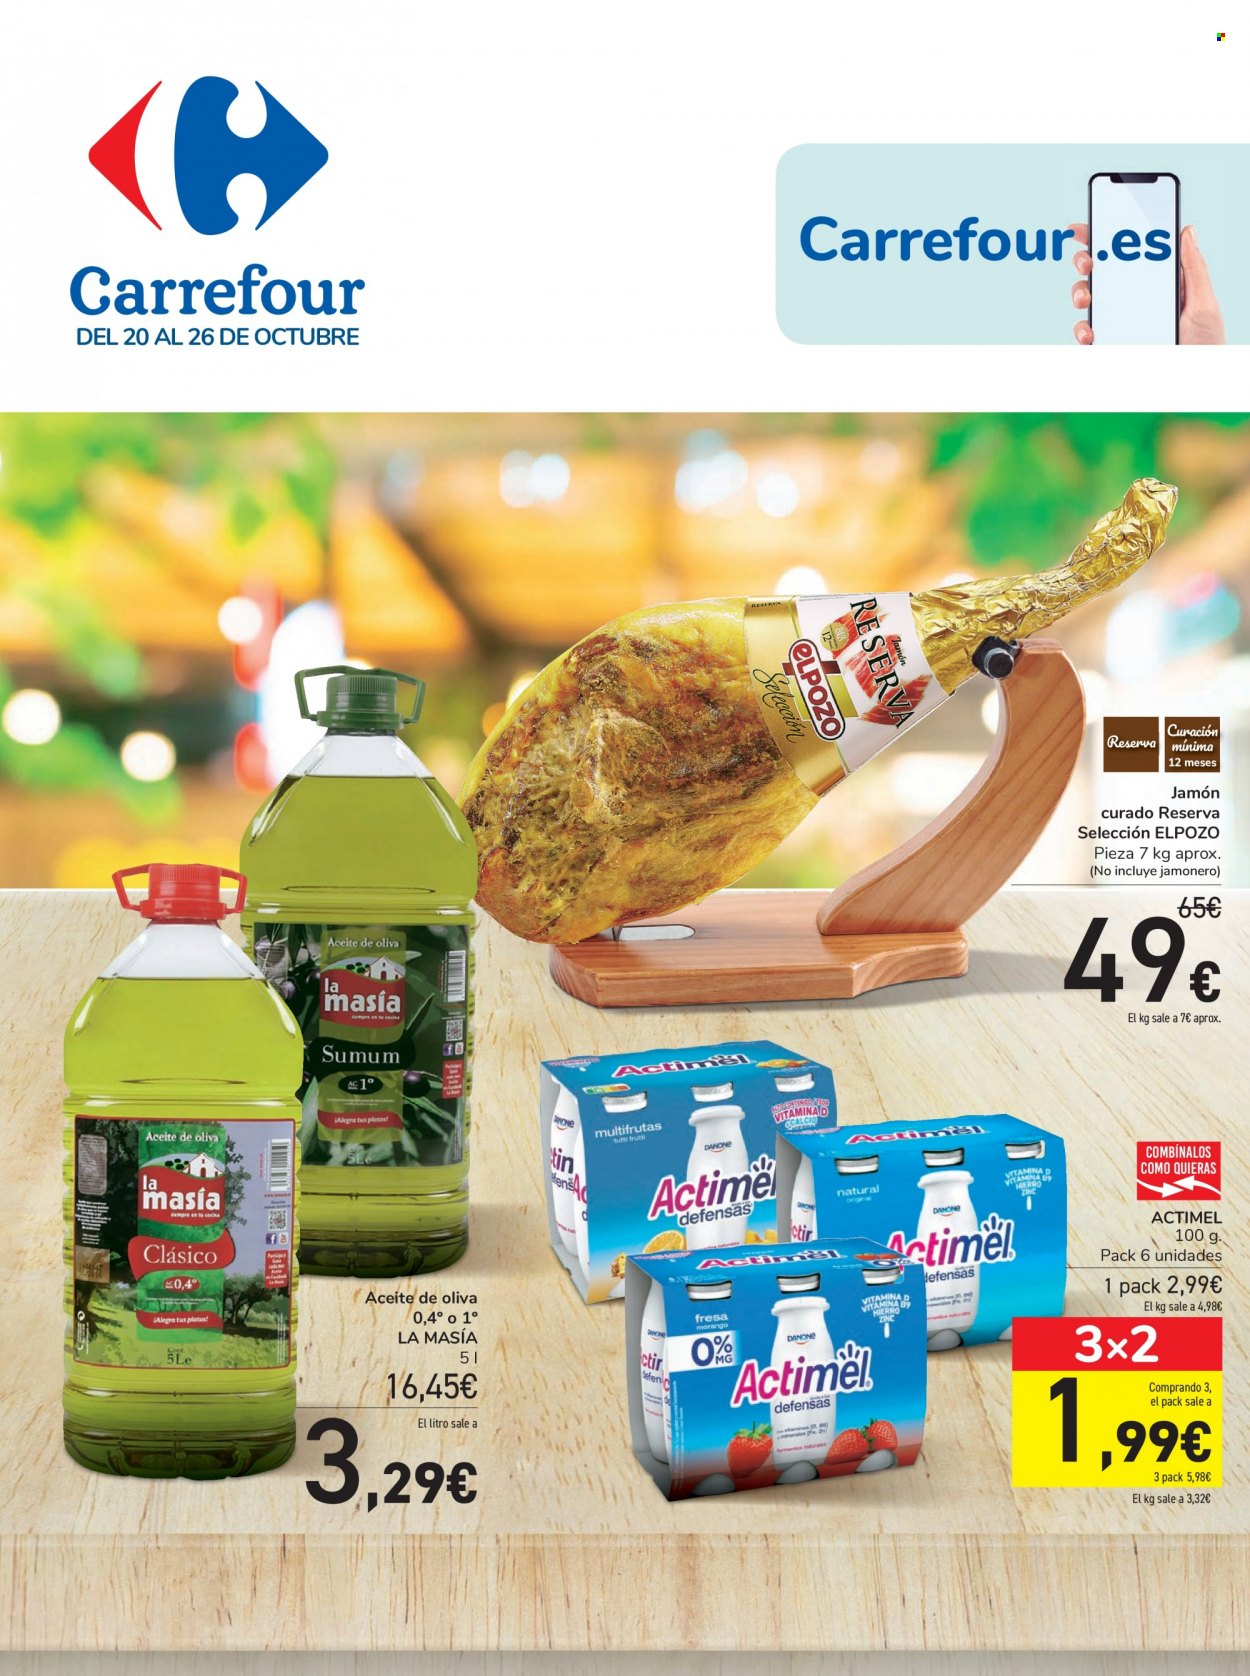 thumbnail - Folleto actual Carrefour - 20/10/21 - 26/10/21 - Ventas - jamón, jamón curado, Danone, Actimel, aceite de oliva, jamonero. Página 1.